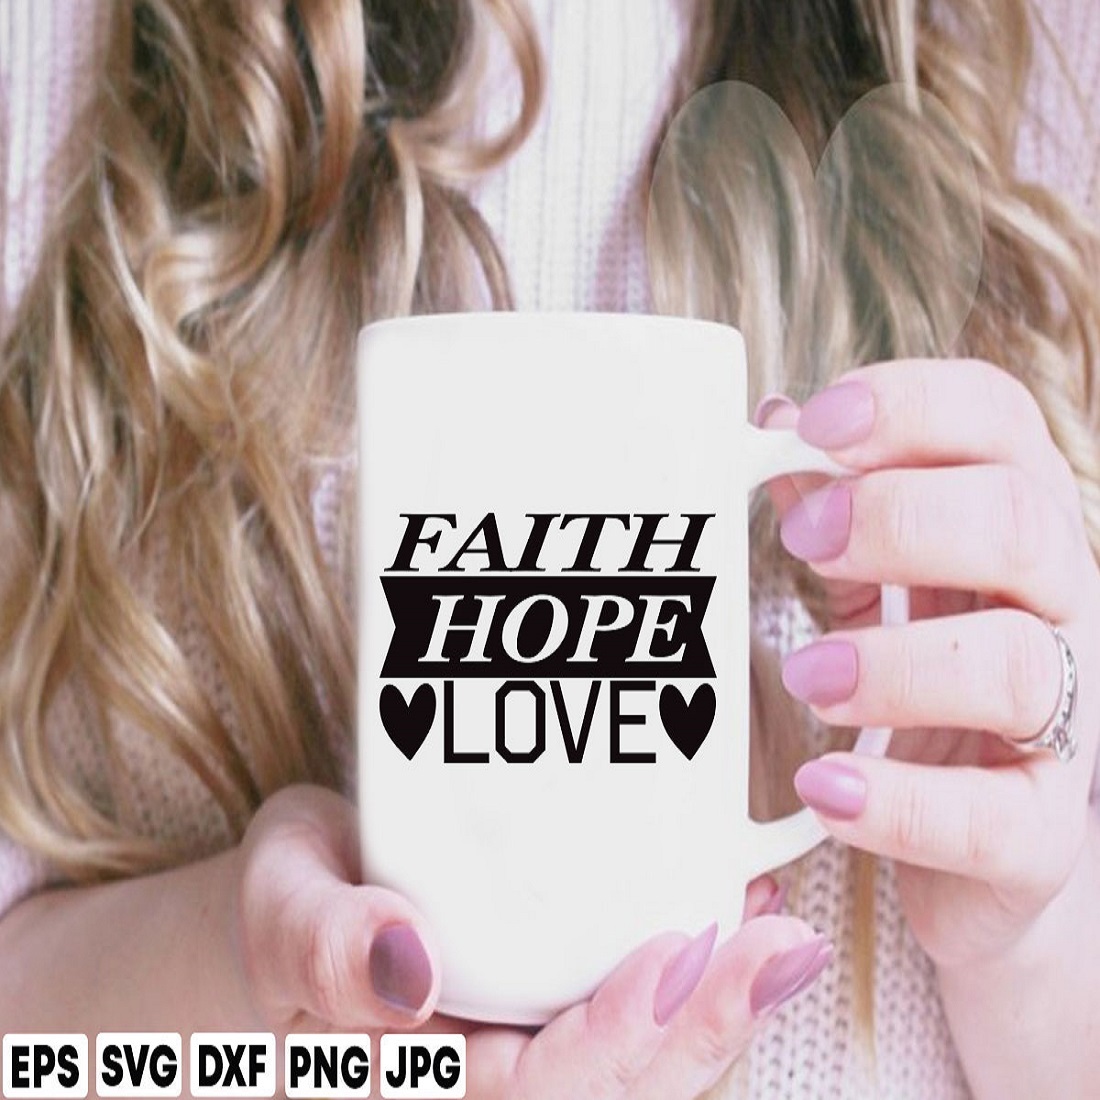 Faith Hope Love cover image.